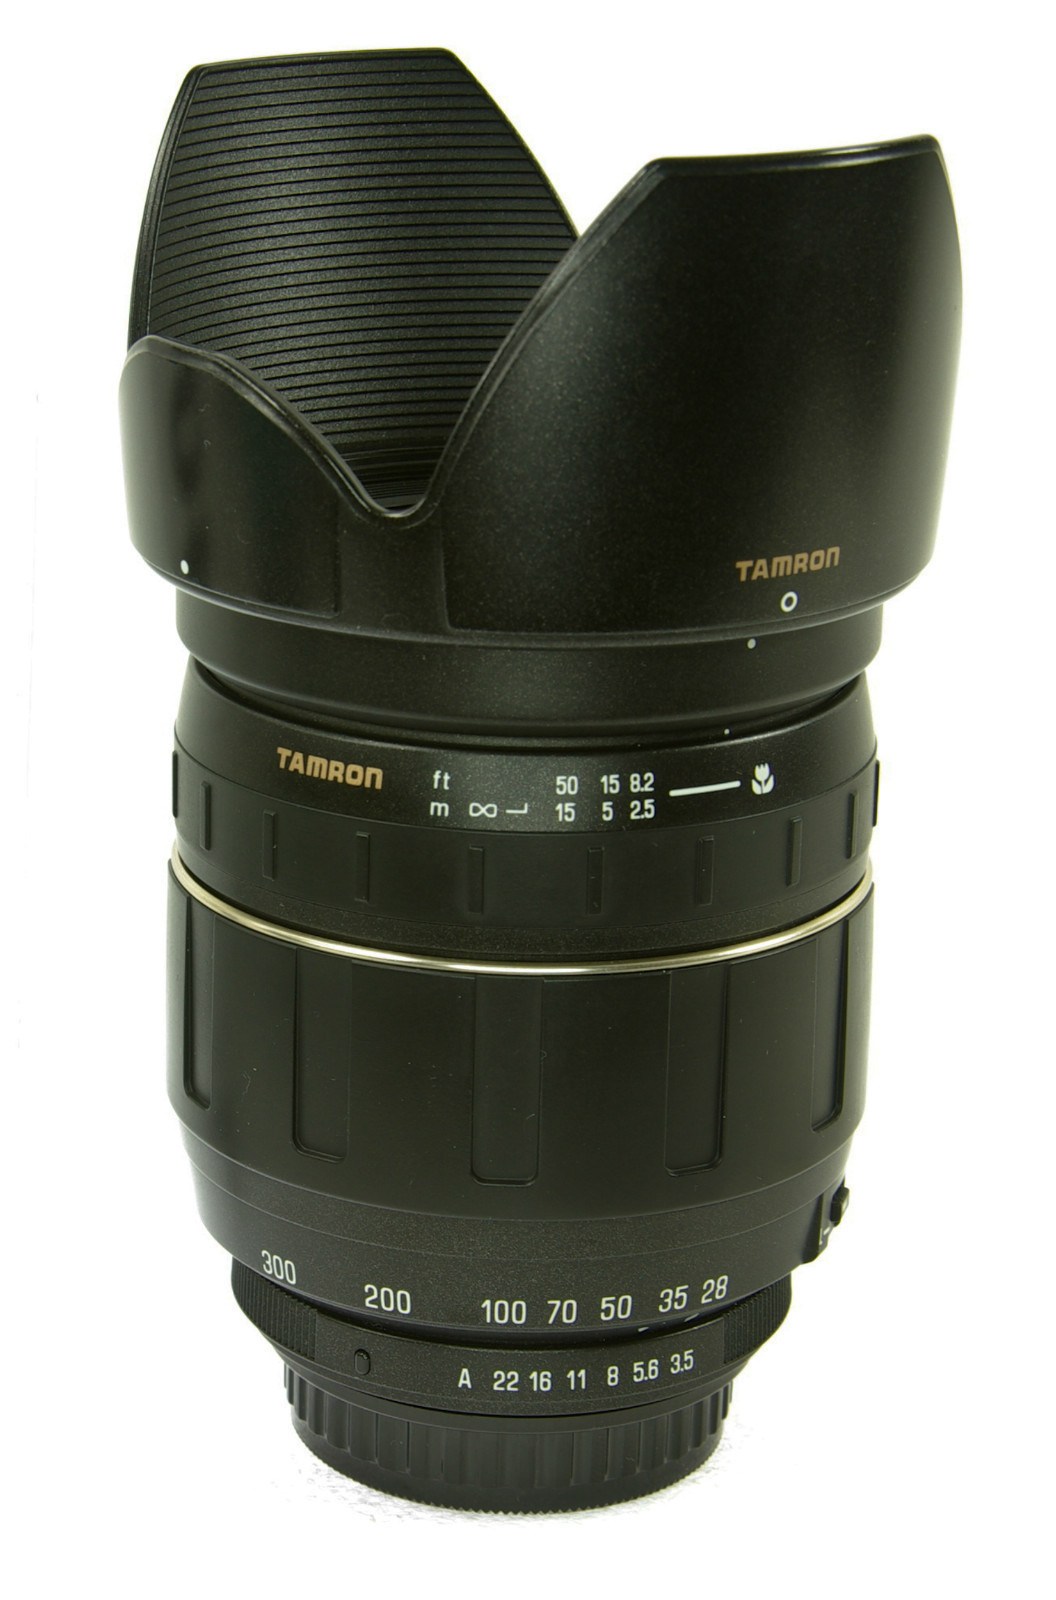 Nikon用 Af 28-300 3.5-6.3 if macro 67 a20